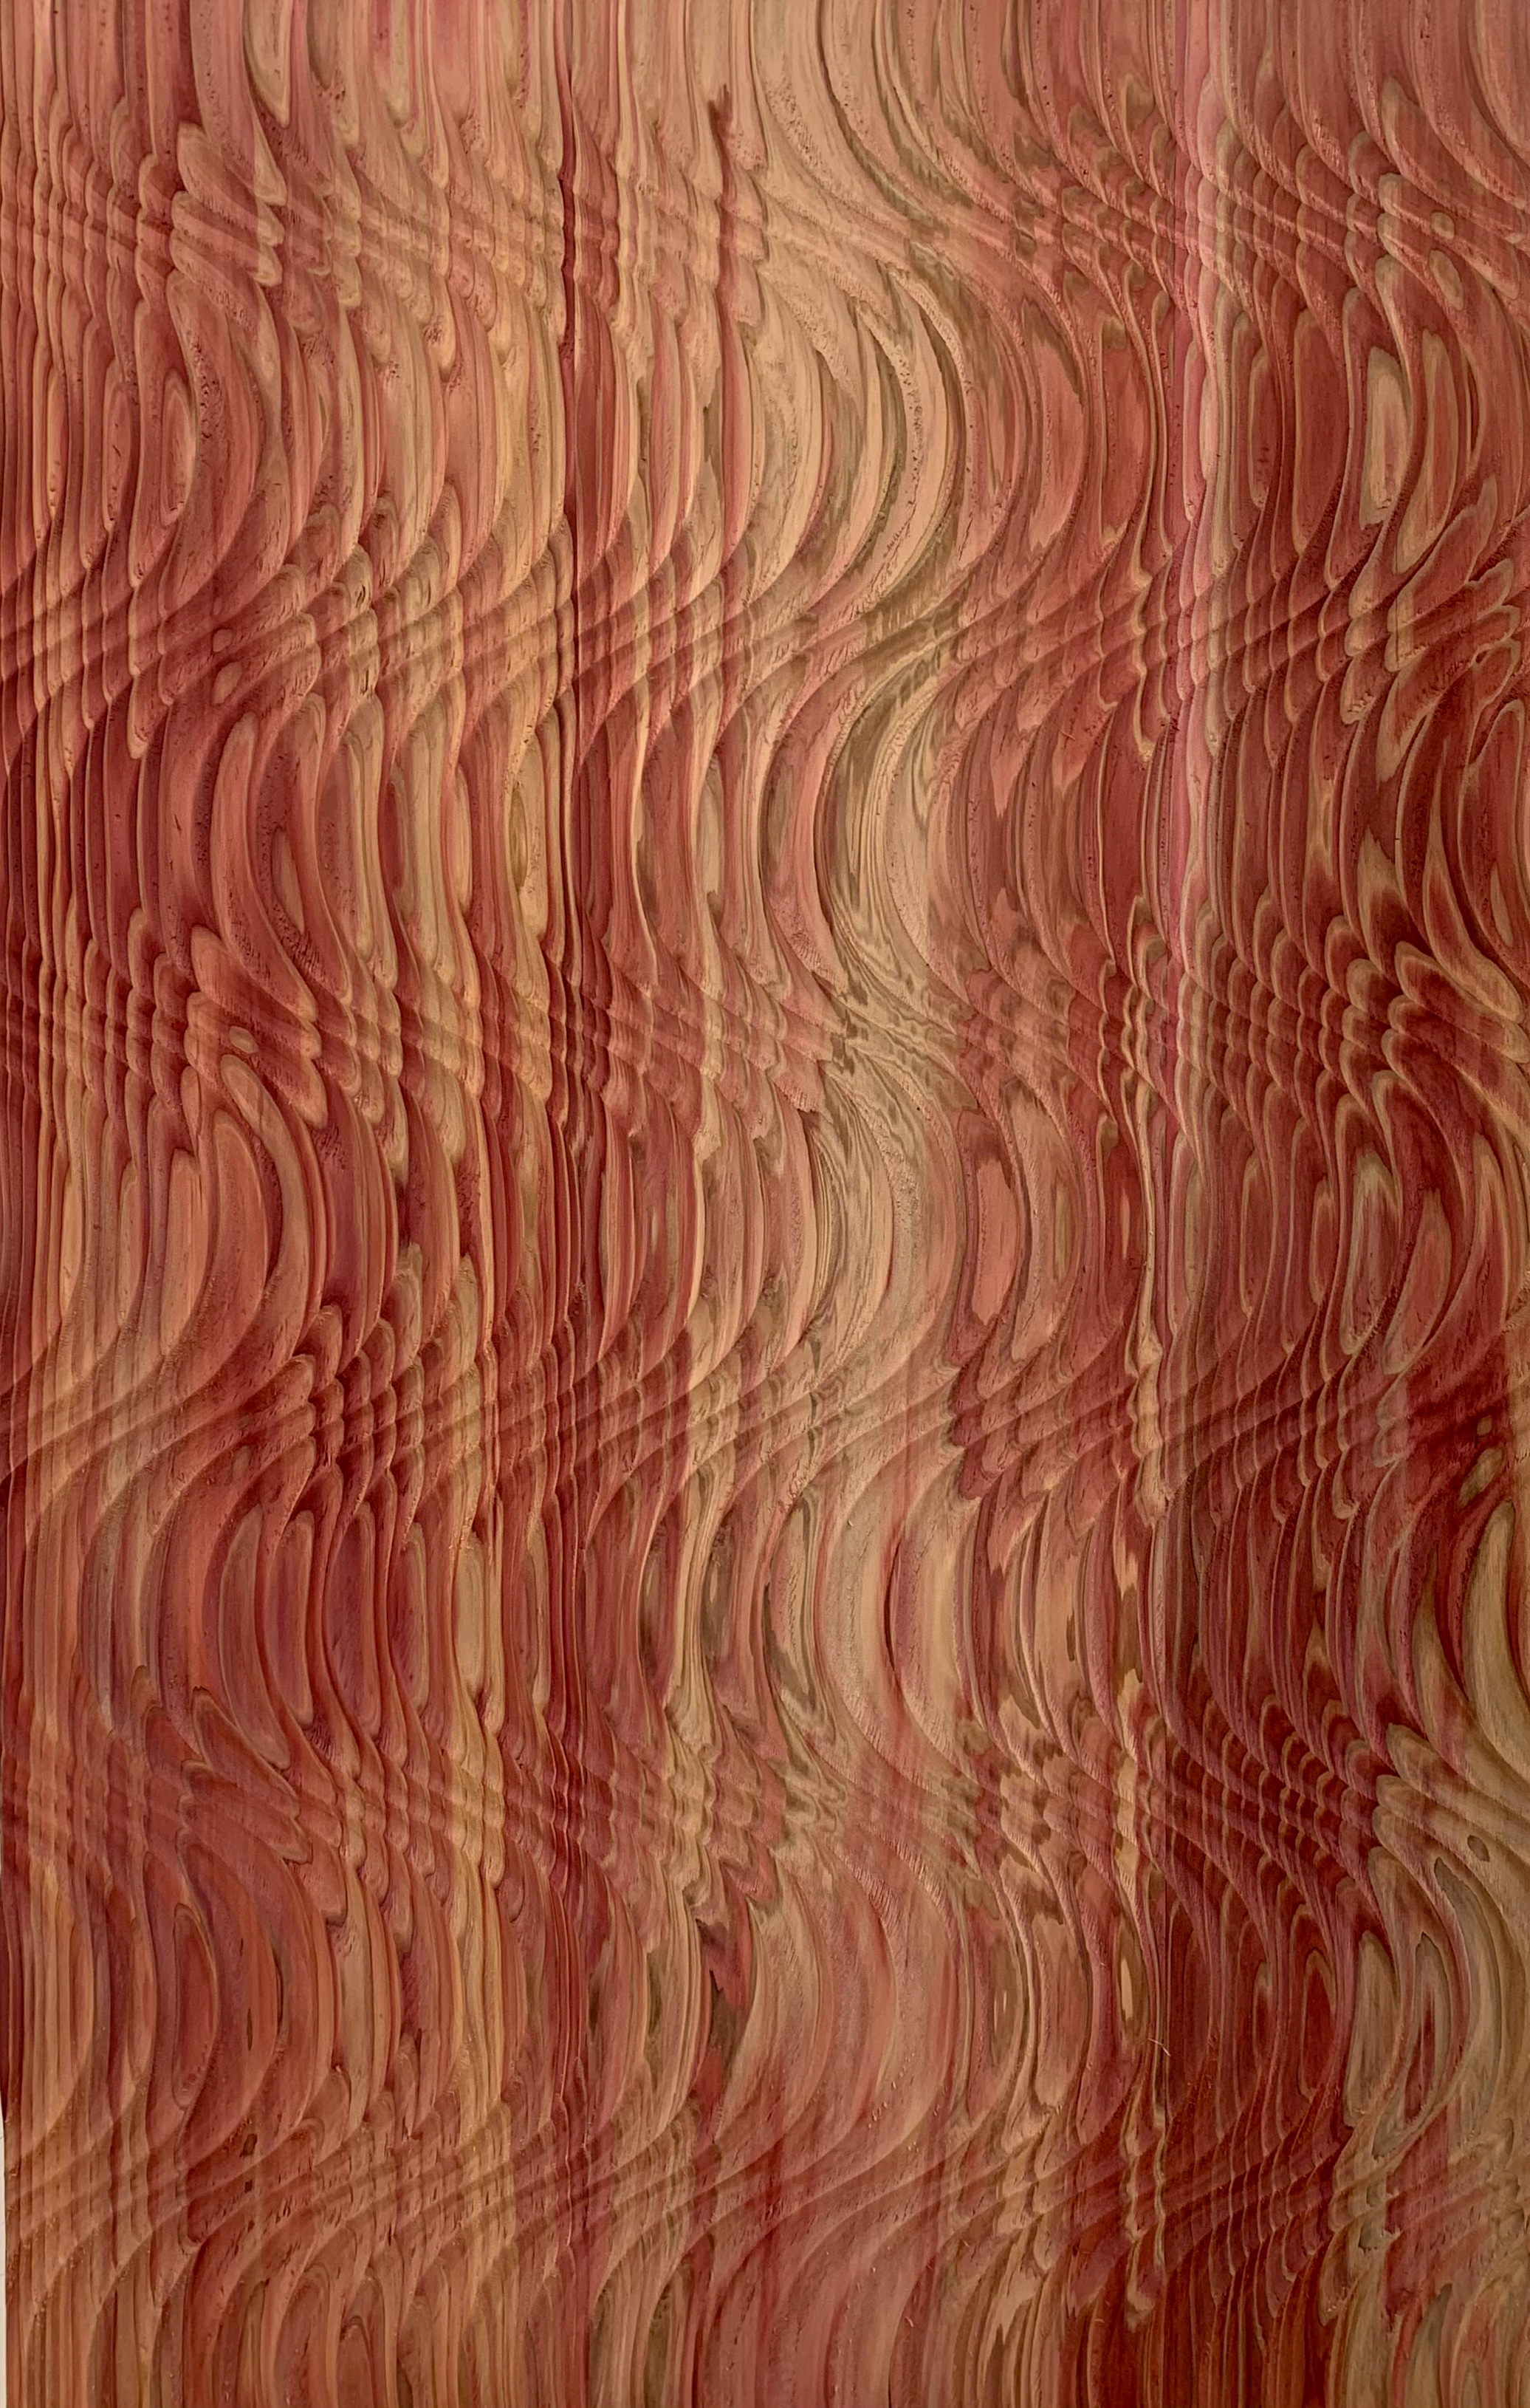 Japanese Cedar Panels CNC